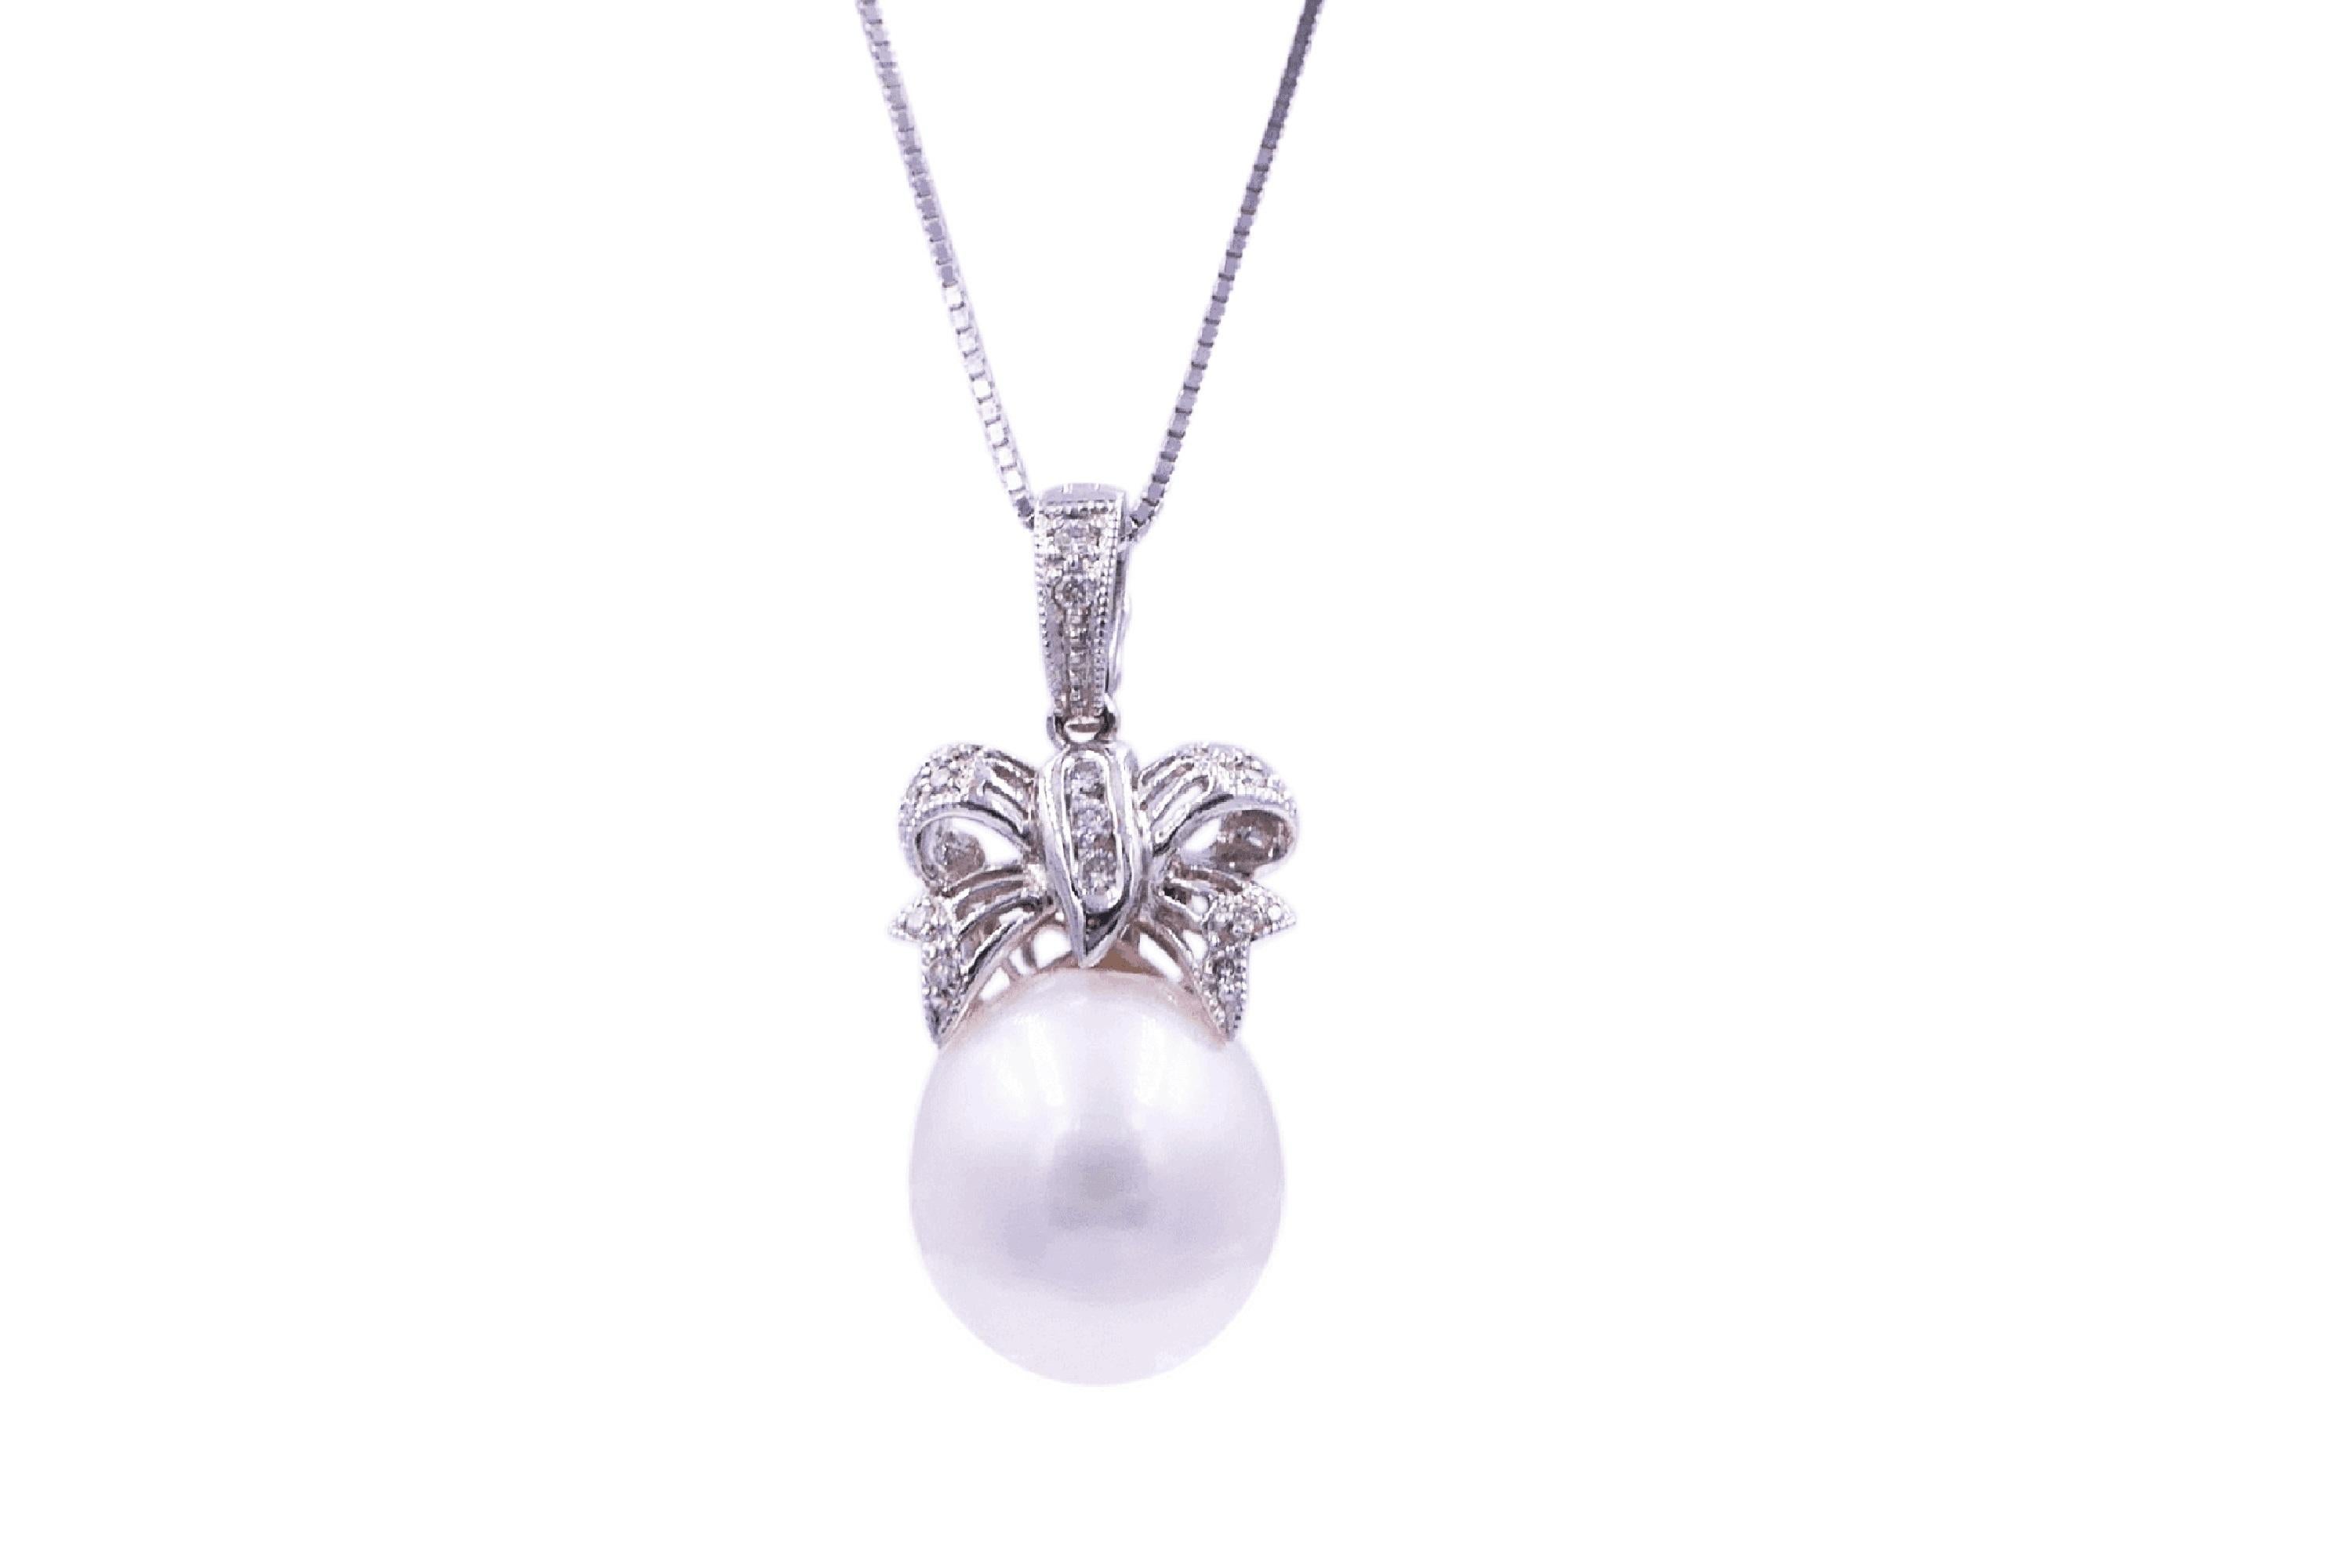 14 Karat White Gold
Genuine South Sea Pearl & Diamonds